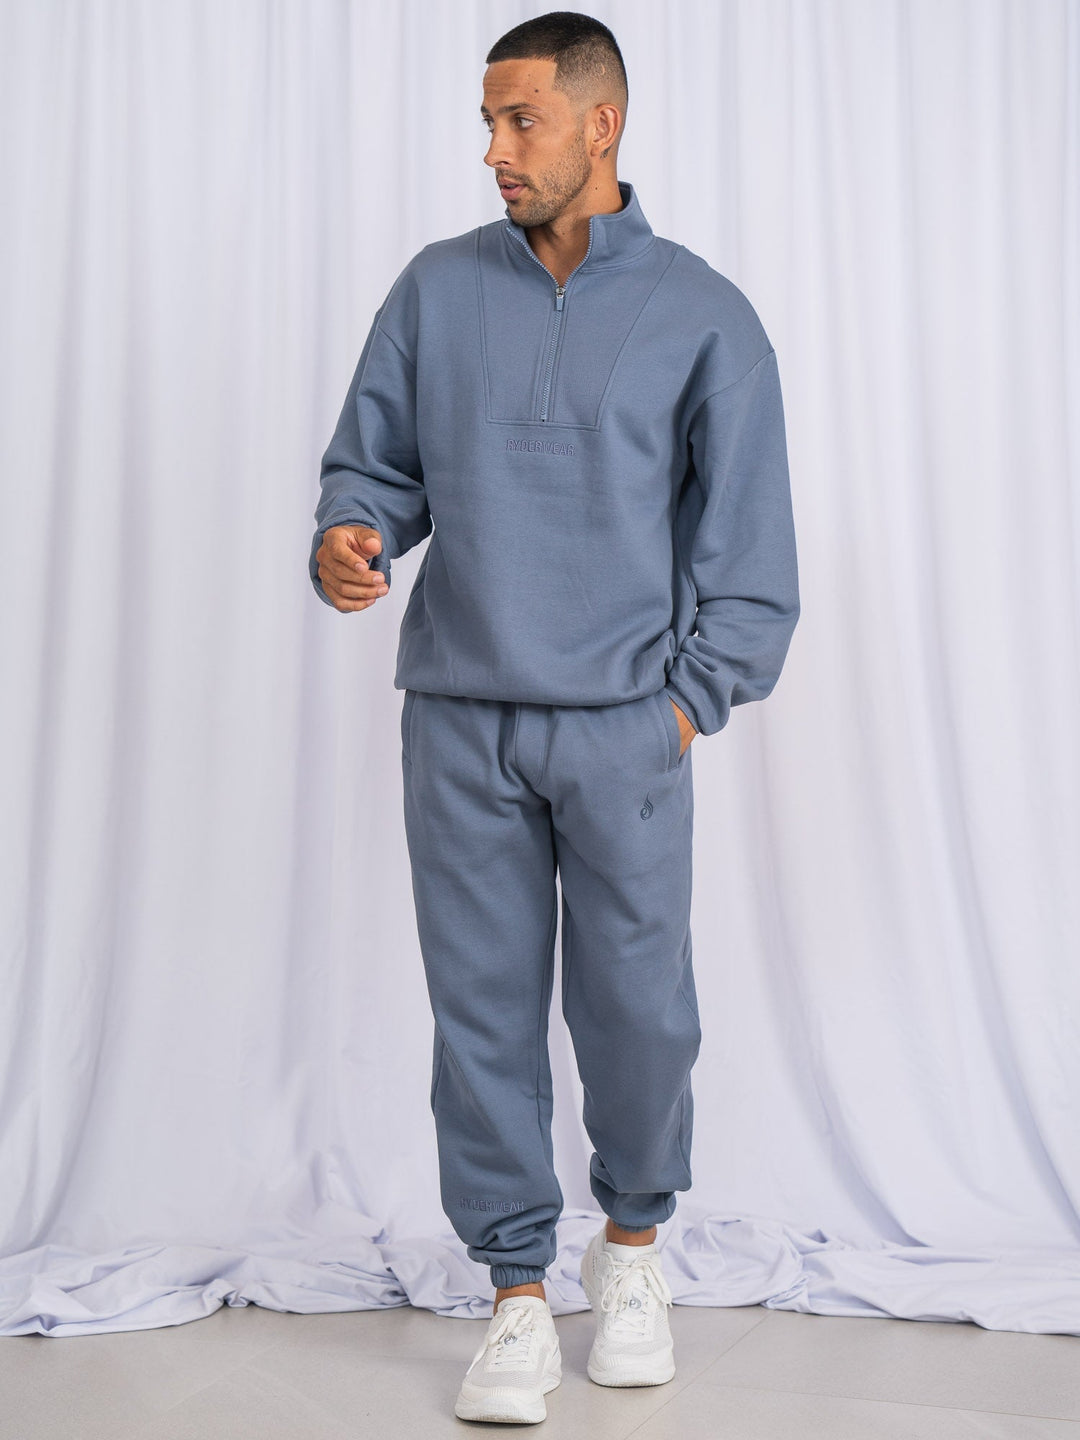 Unisex Track Pants - Denim Blue Clothing Ryderwear 